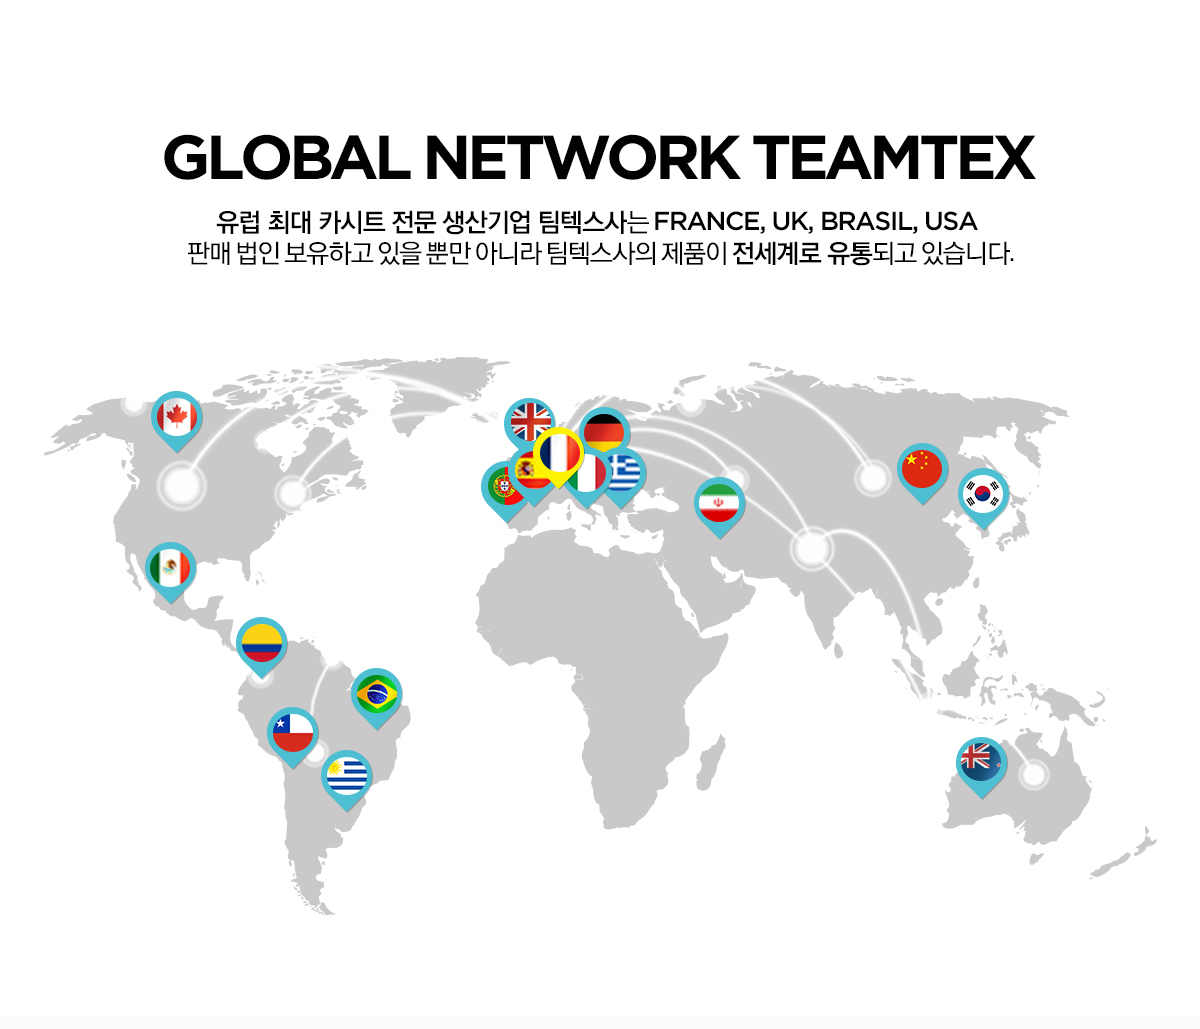 Global network teamtex 유럽 최대 카시트 전문 생산기업 팀텍스사는 France, UK, brasil, USA 판매 법인 보유하고 있을 뿐만 아니라 팀텍스사의 제품이 전세계로 유통되고 있습니다.